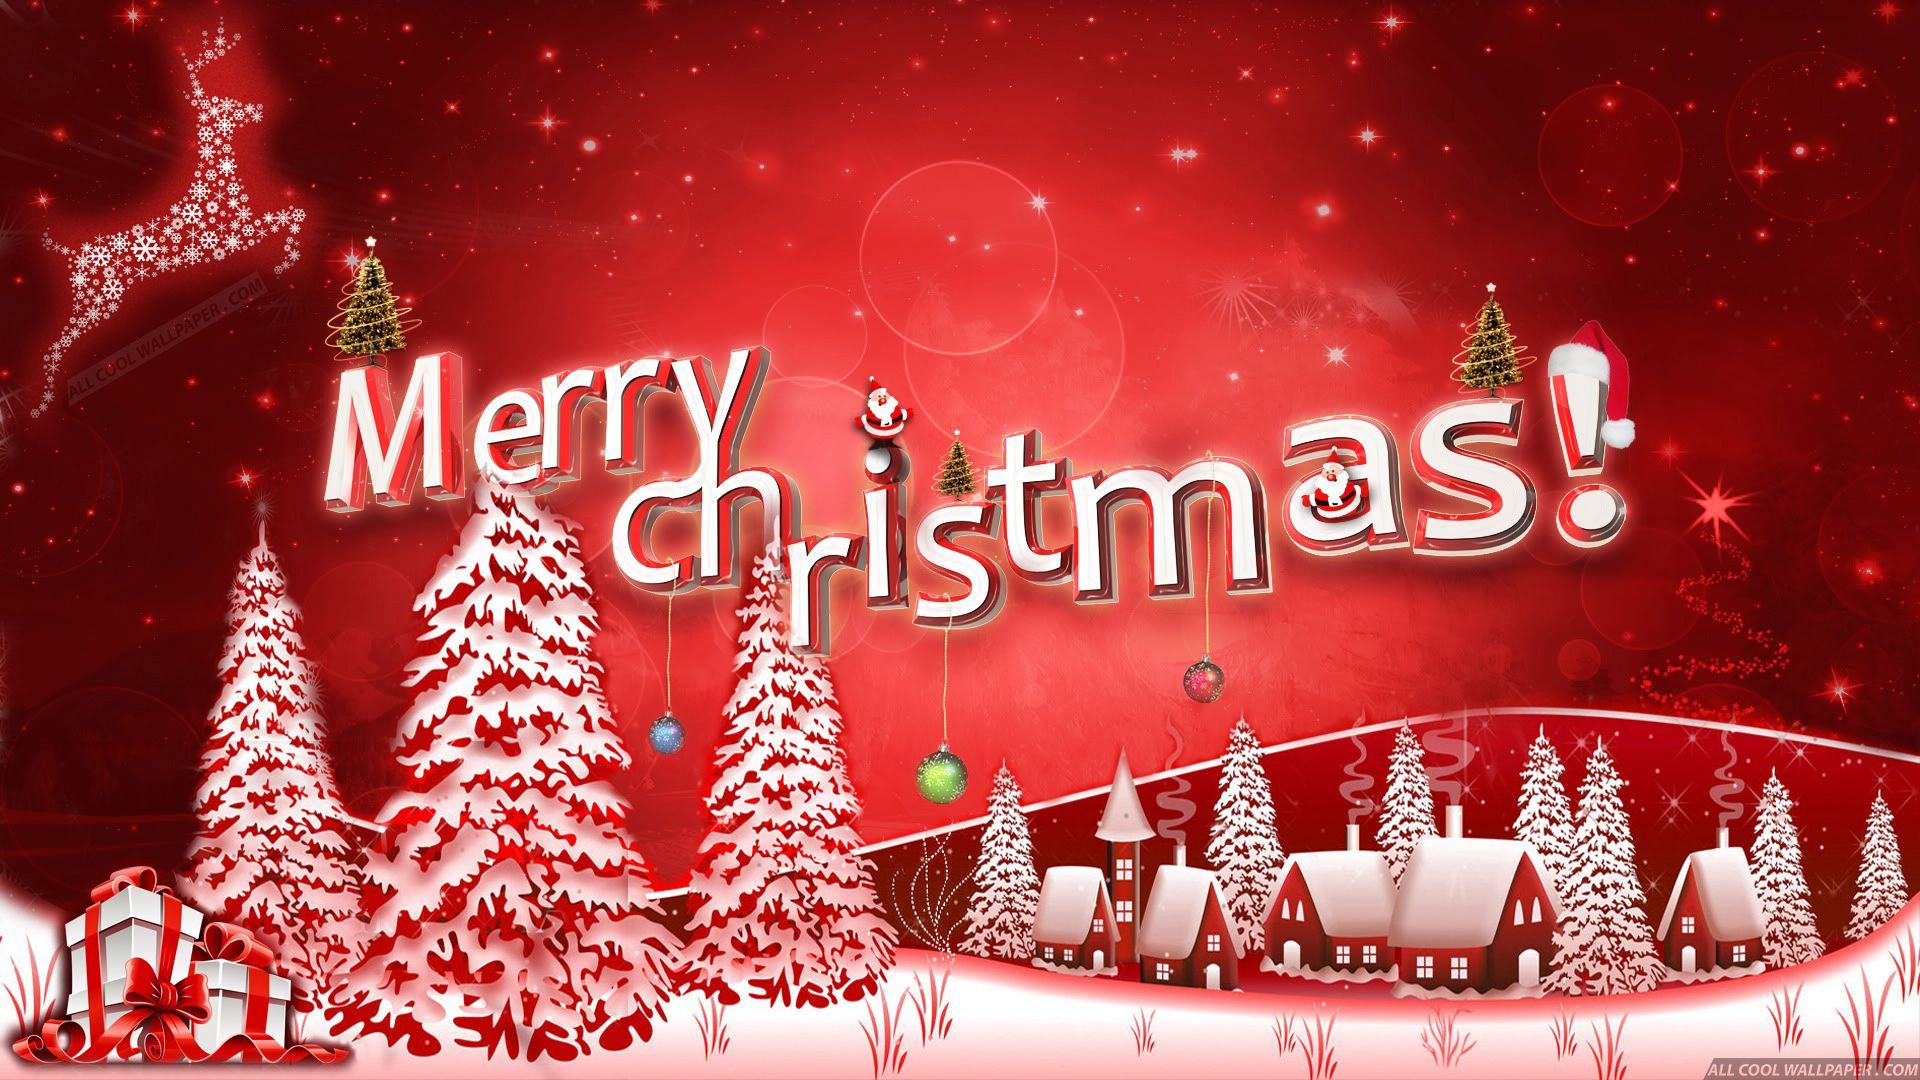 Download-Luxurious-Merry-Christmas-Wallpaper-HD-Free.jpg